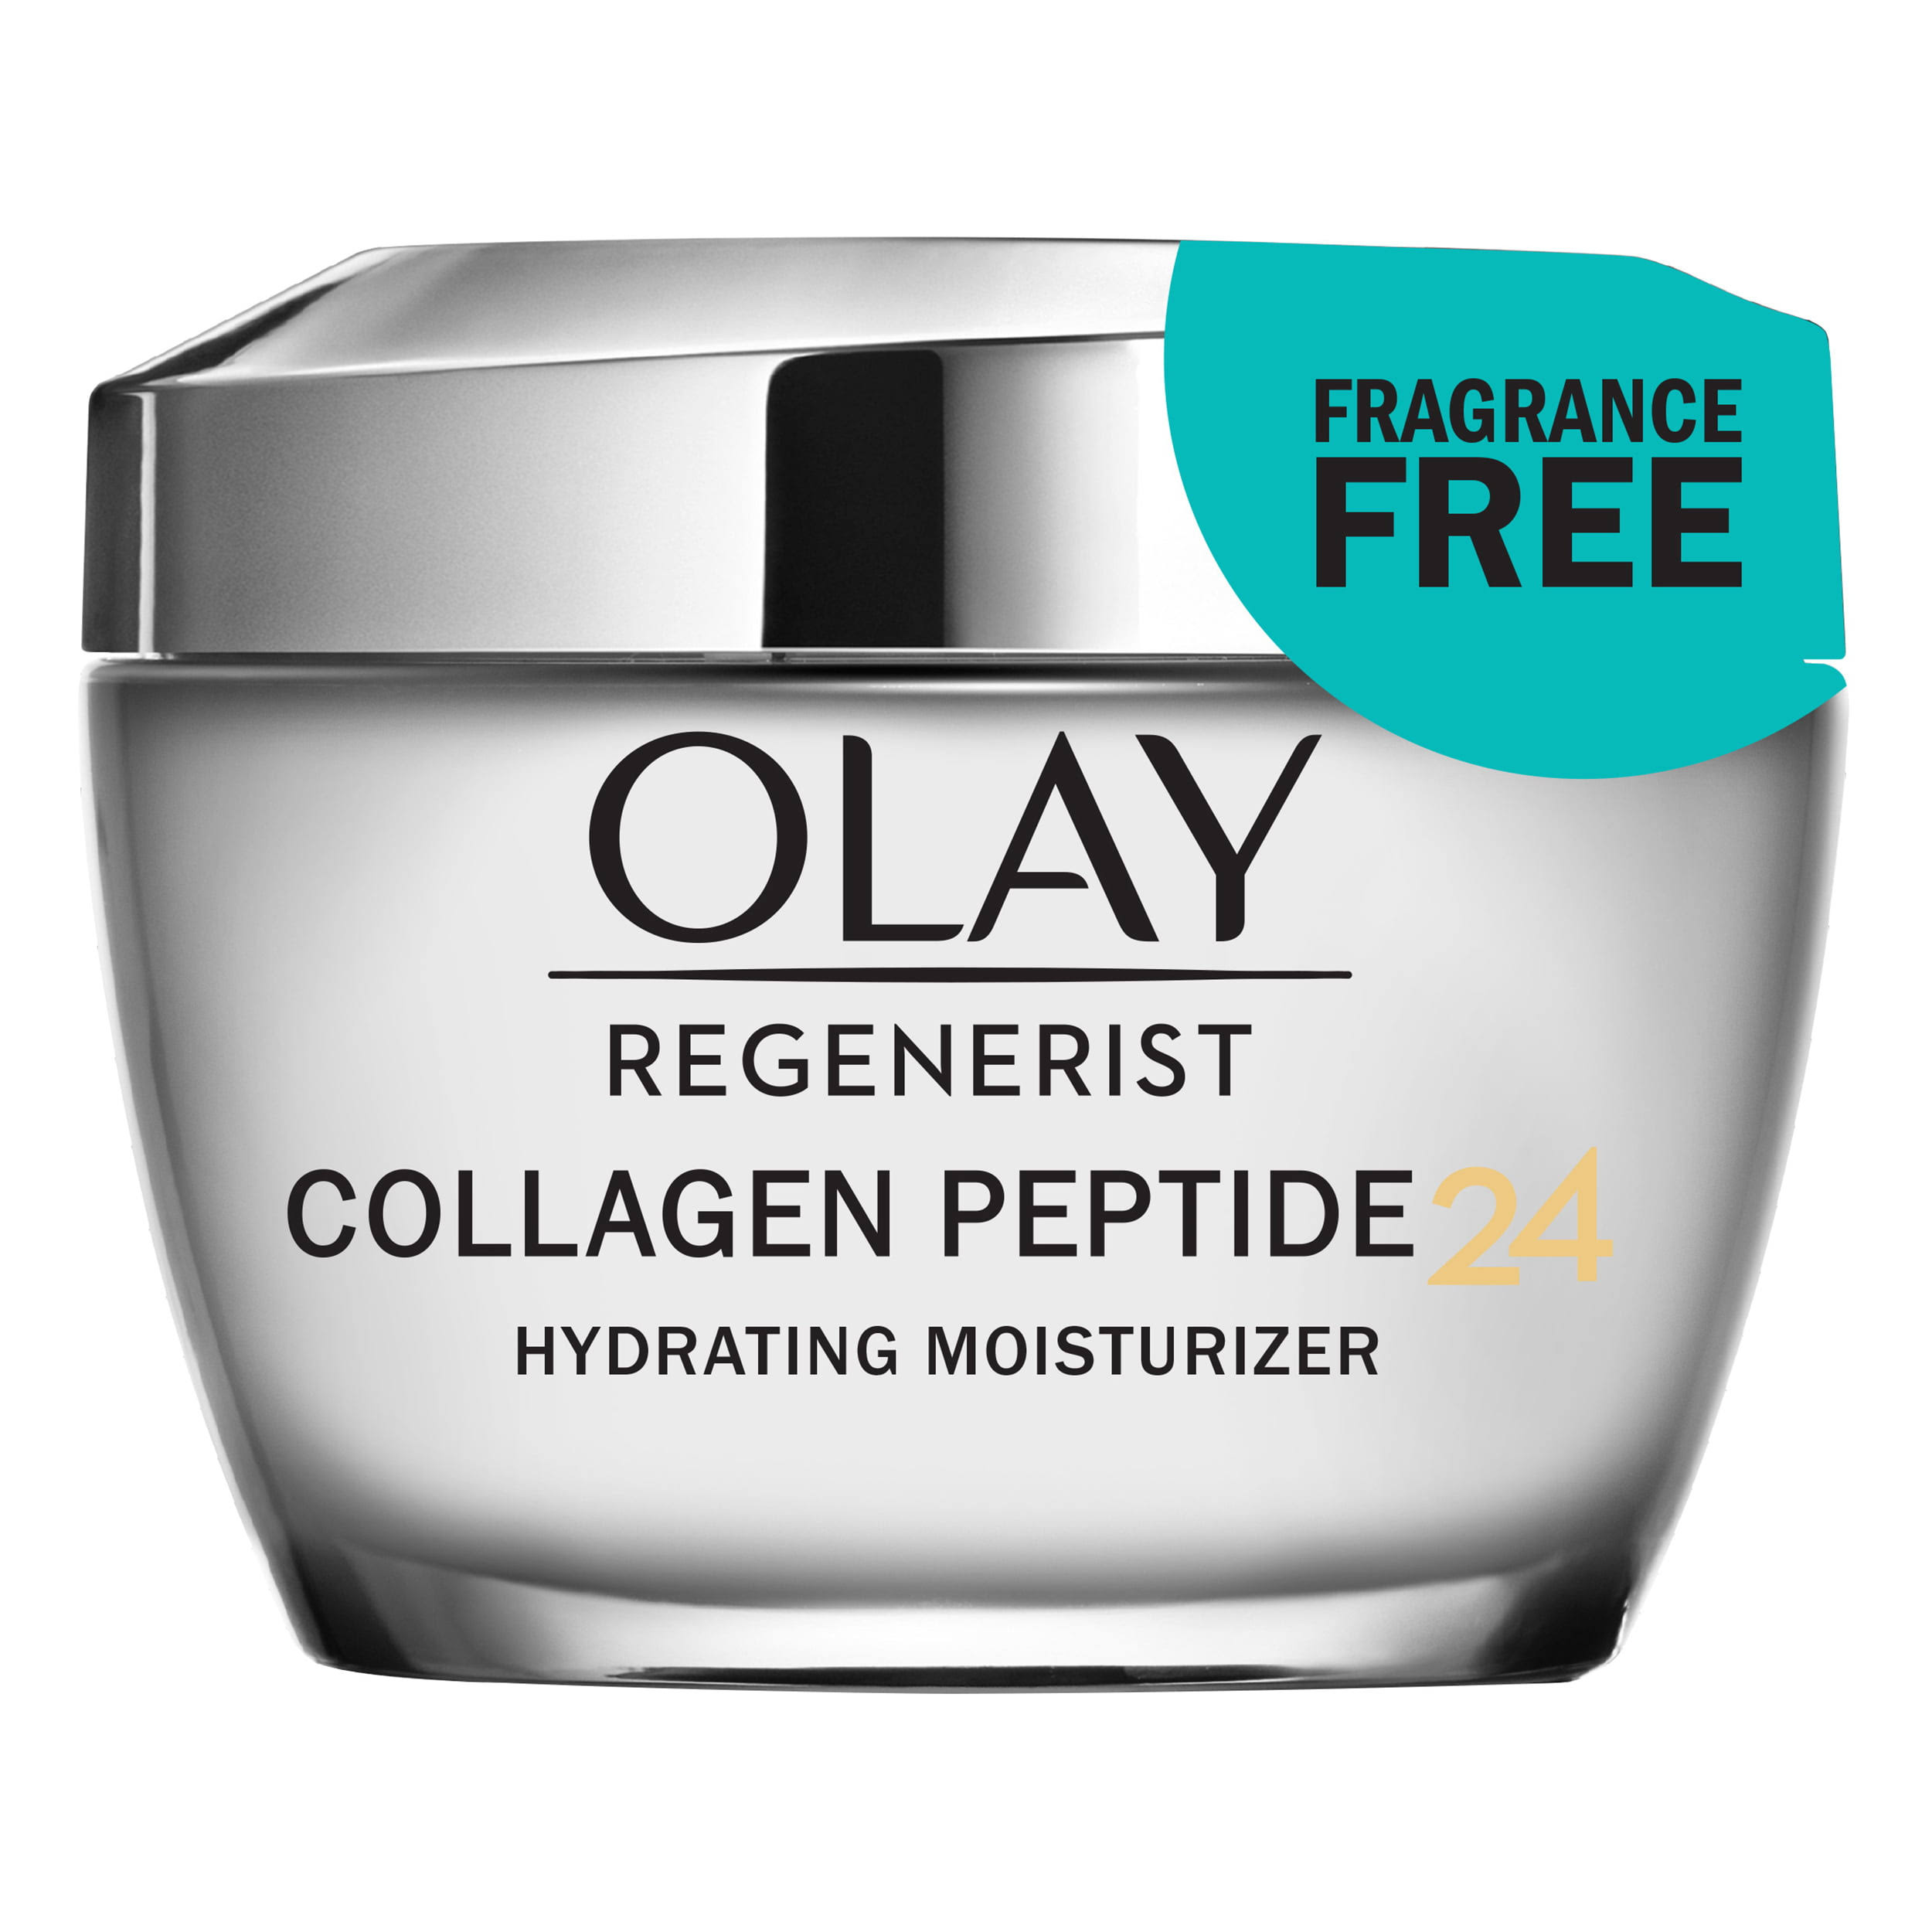 Olay Regenerist Collagen Peptide 24 Face Moisturizer - Fragrance-Free, 1.7 oz